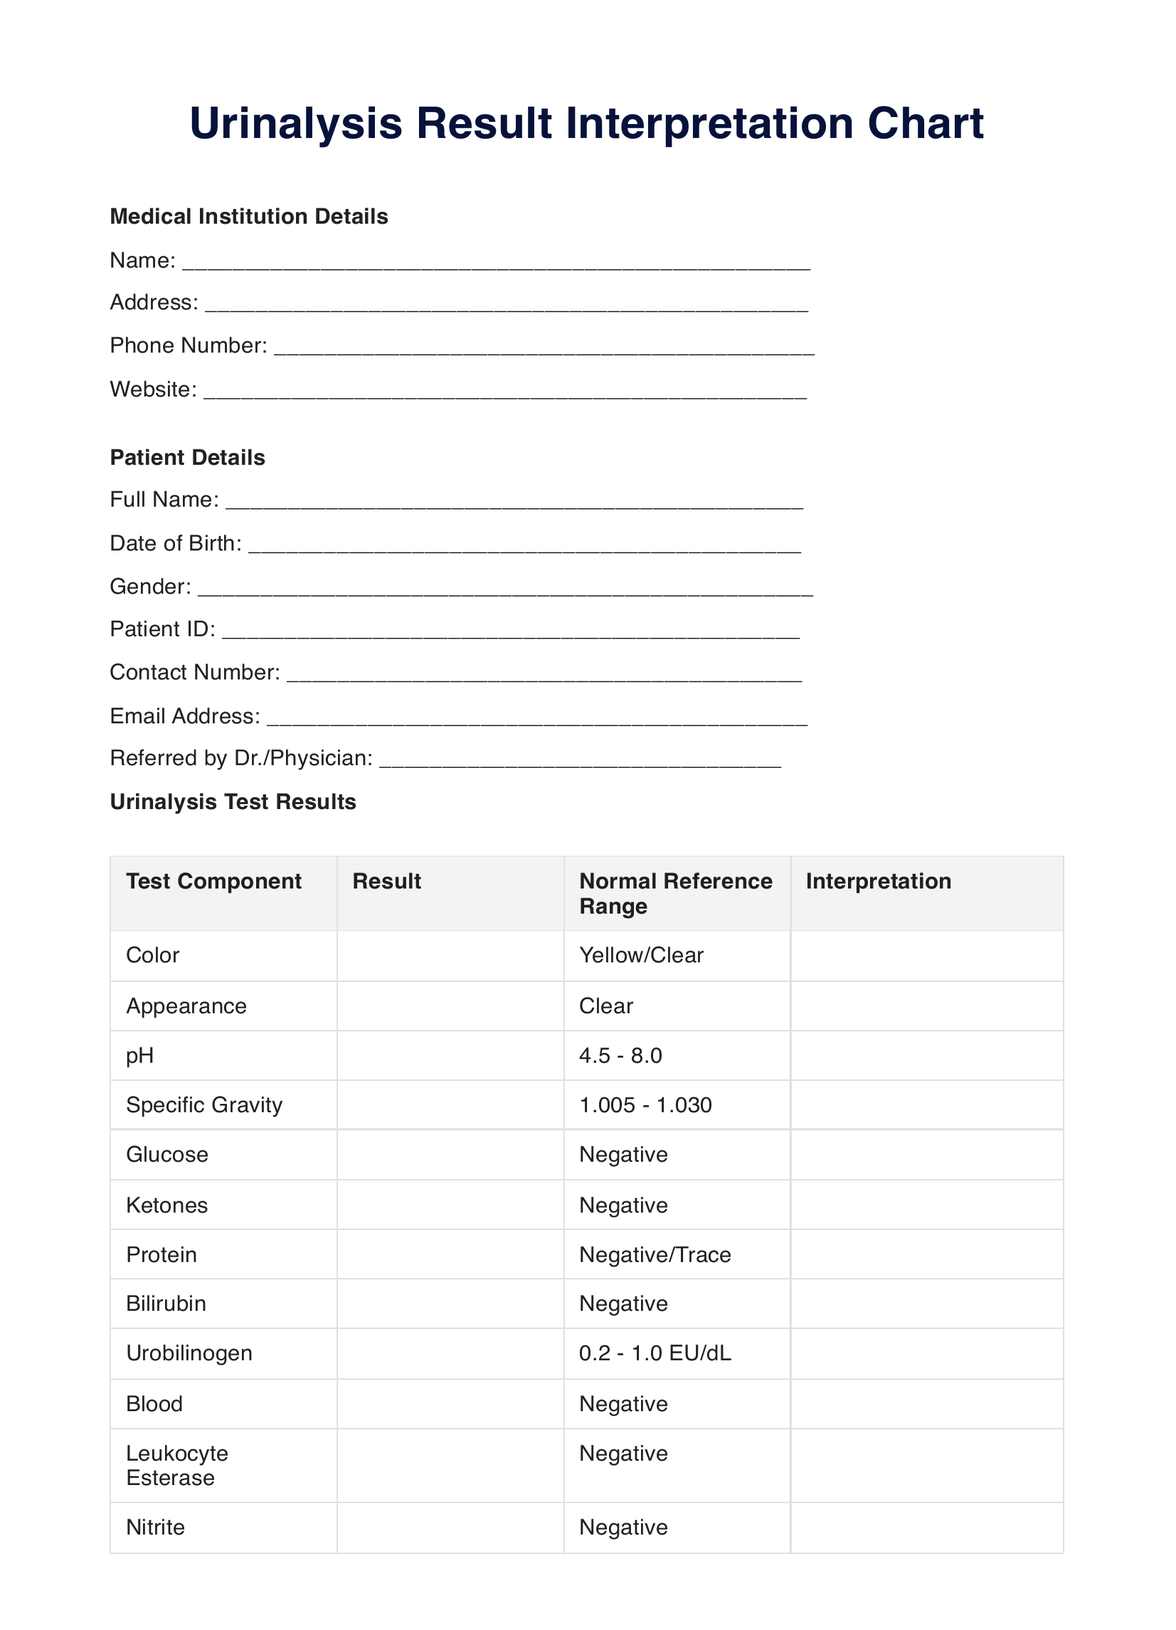 Urinalysis Result Interpretation PDF Example